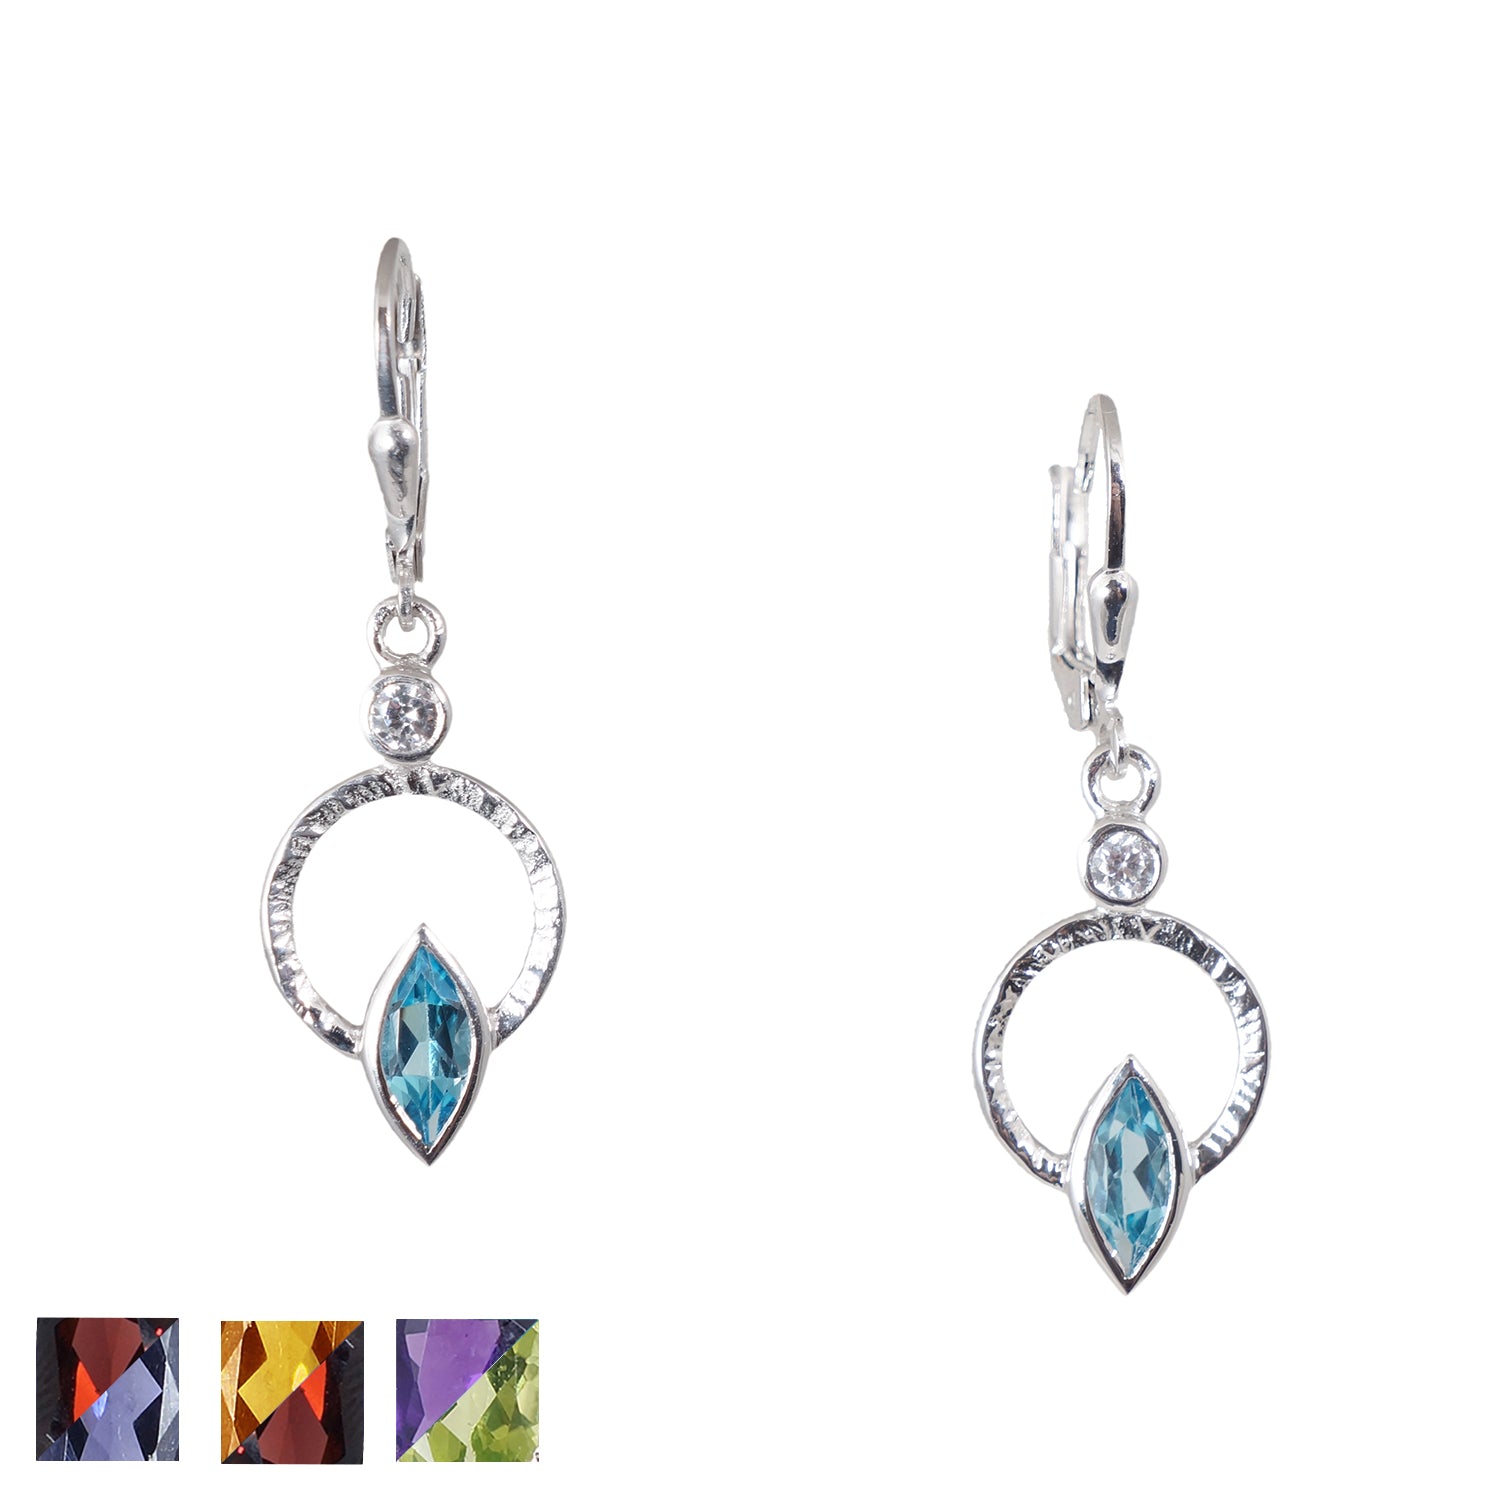 Peridot Jewelry: Earrings, Necklaces, Rings